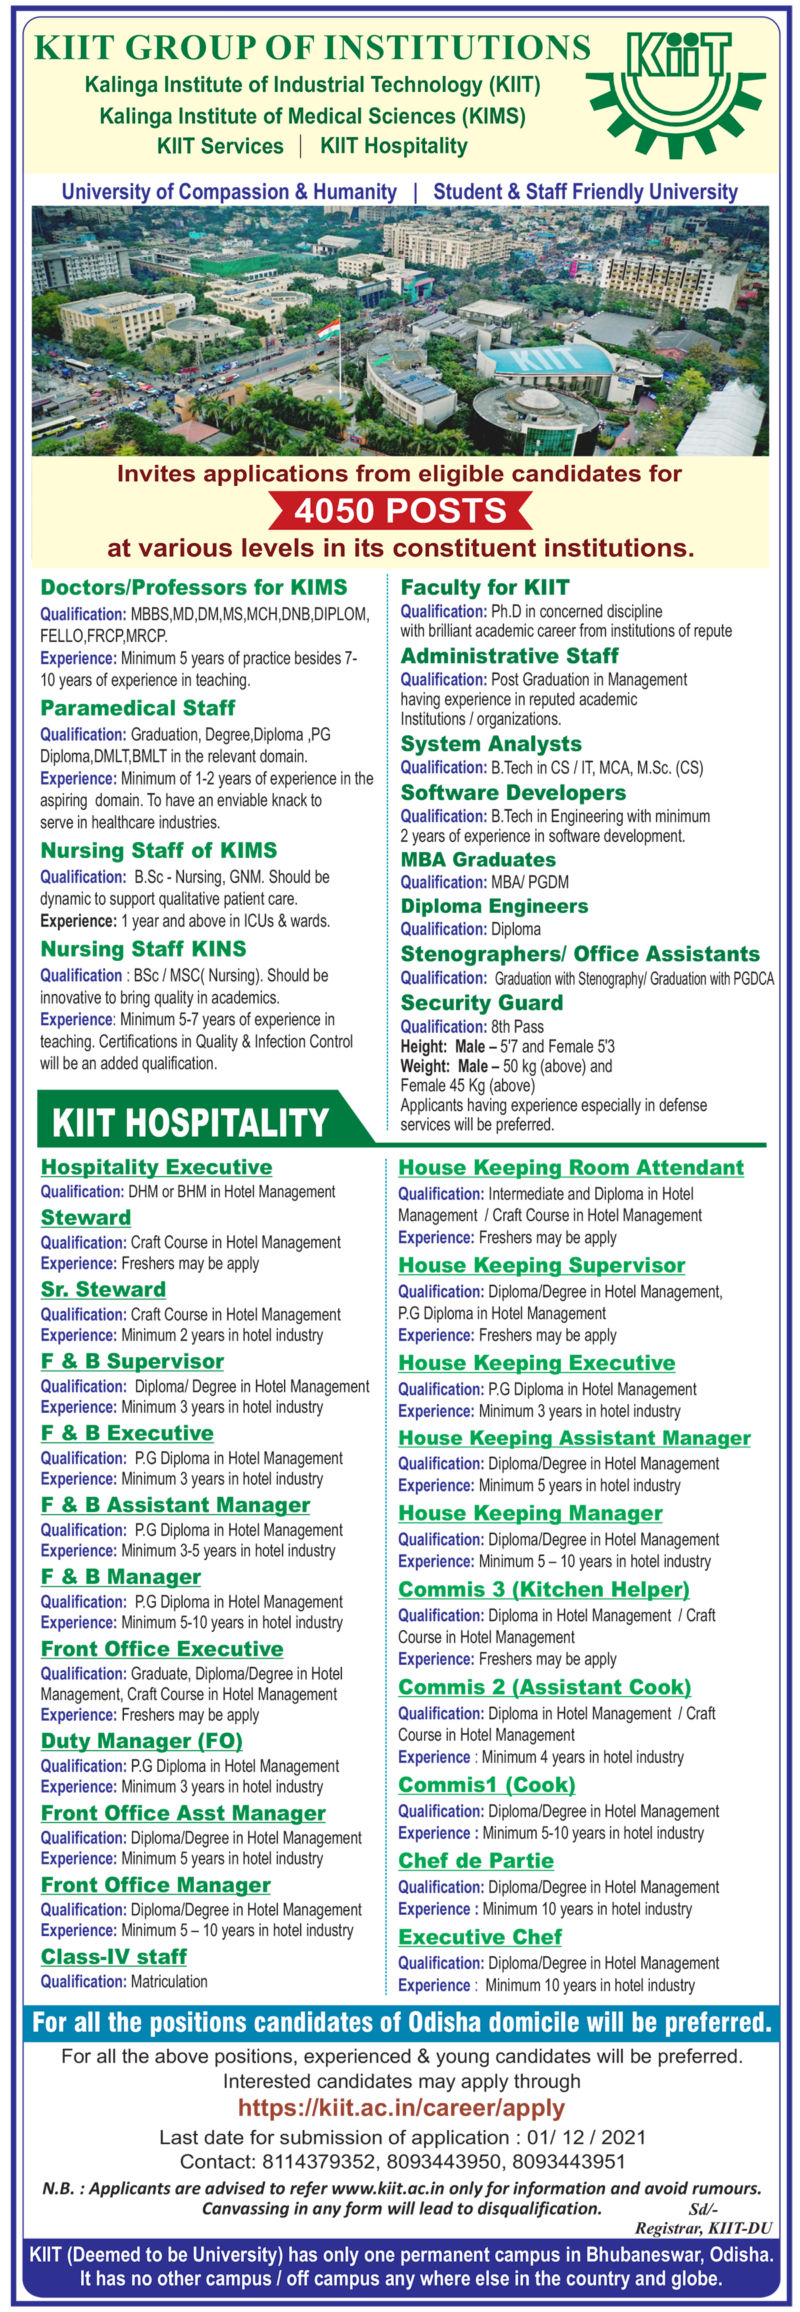 KIIT University Job opportunity Mega Recruitment Openings